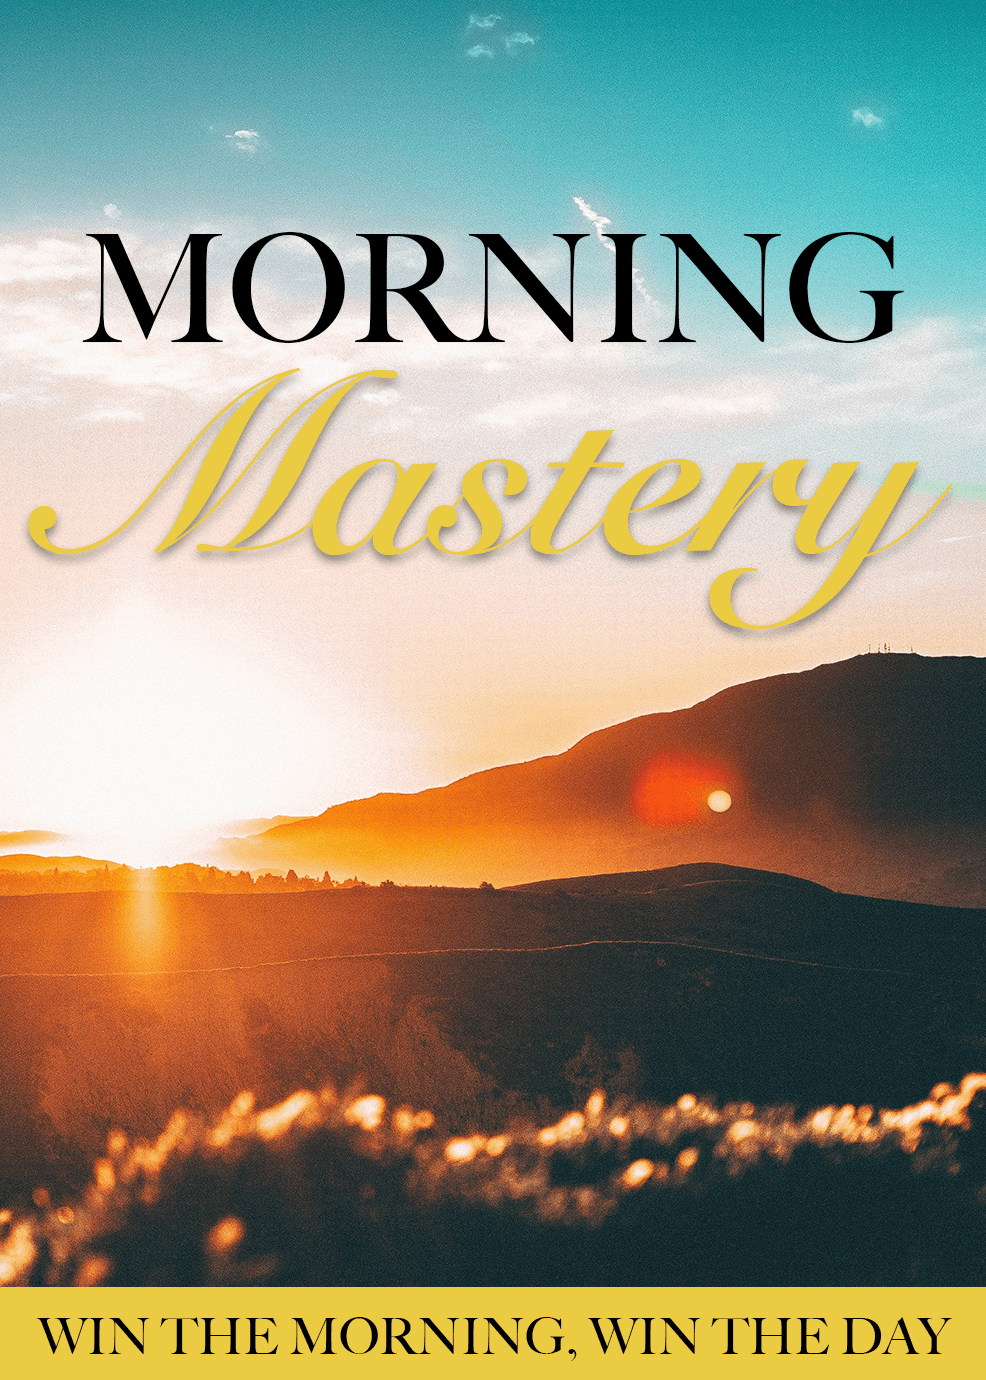 Morning Mastery Video